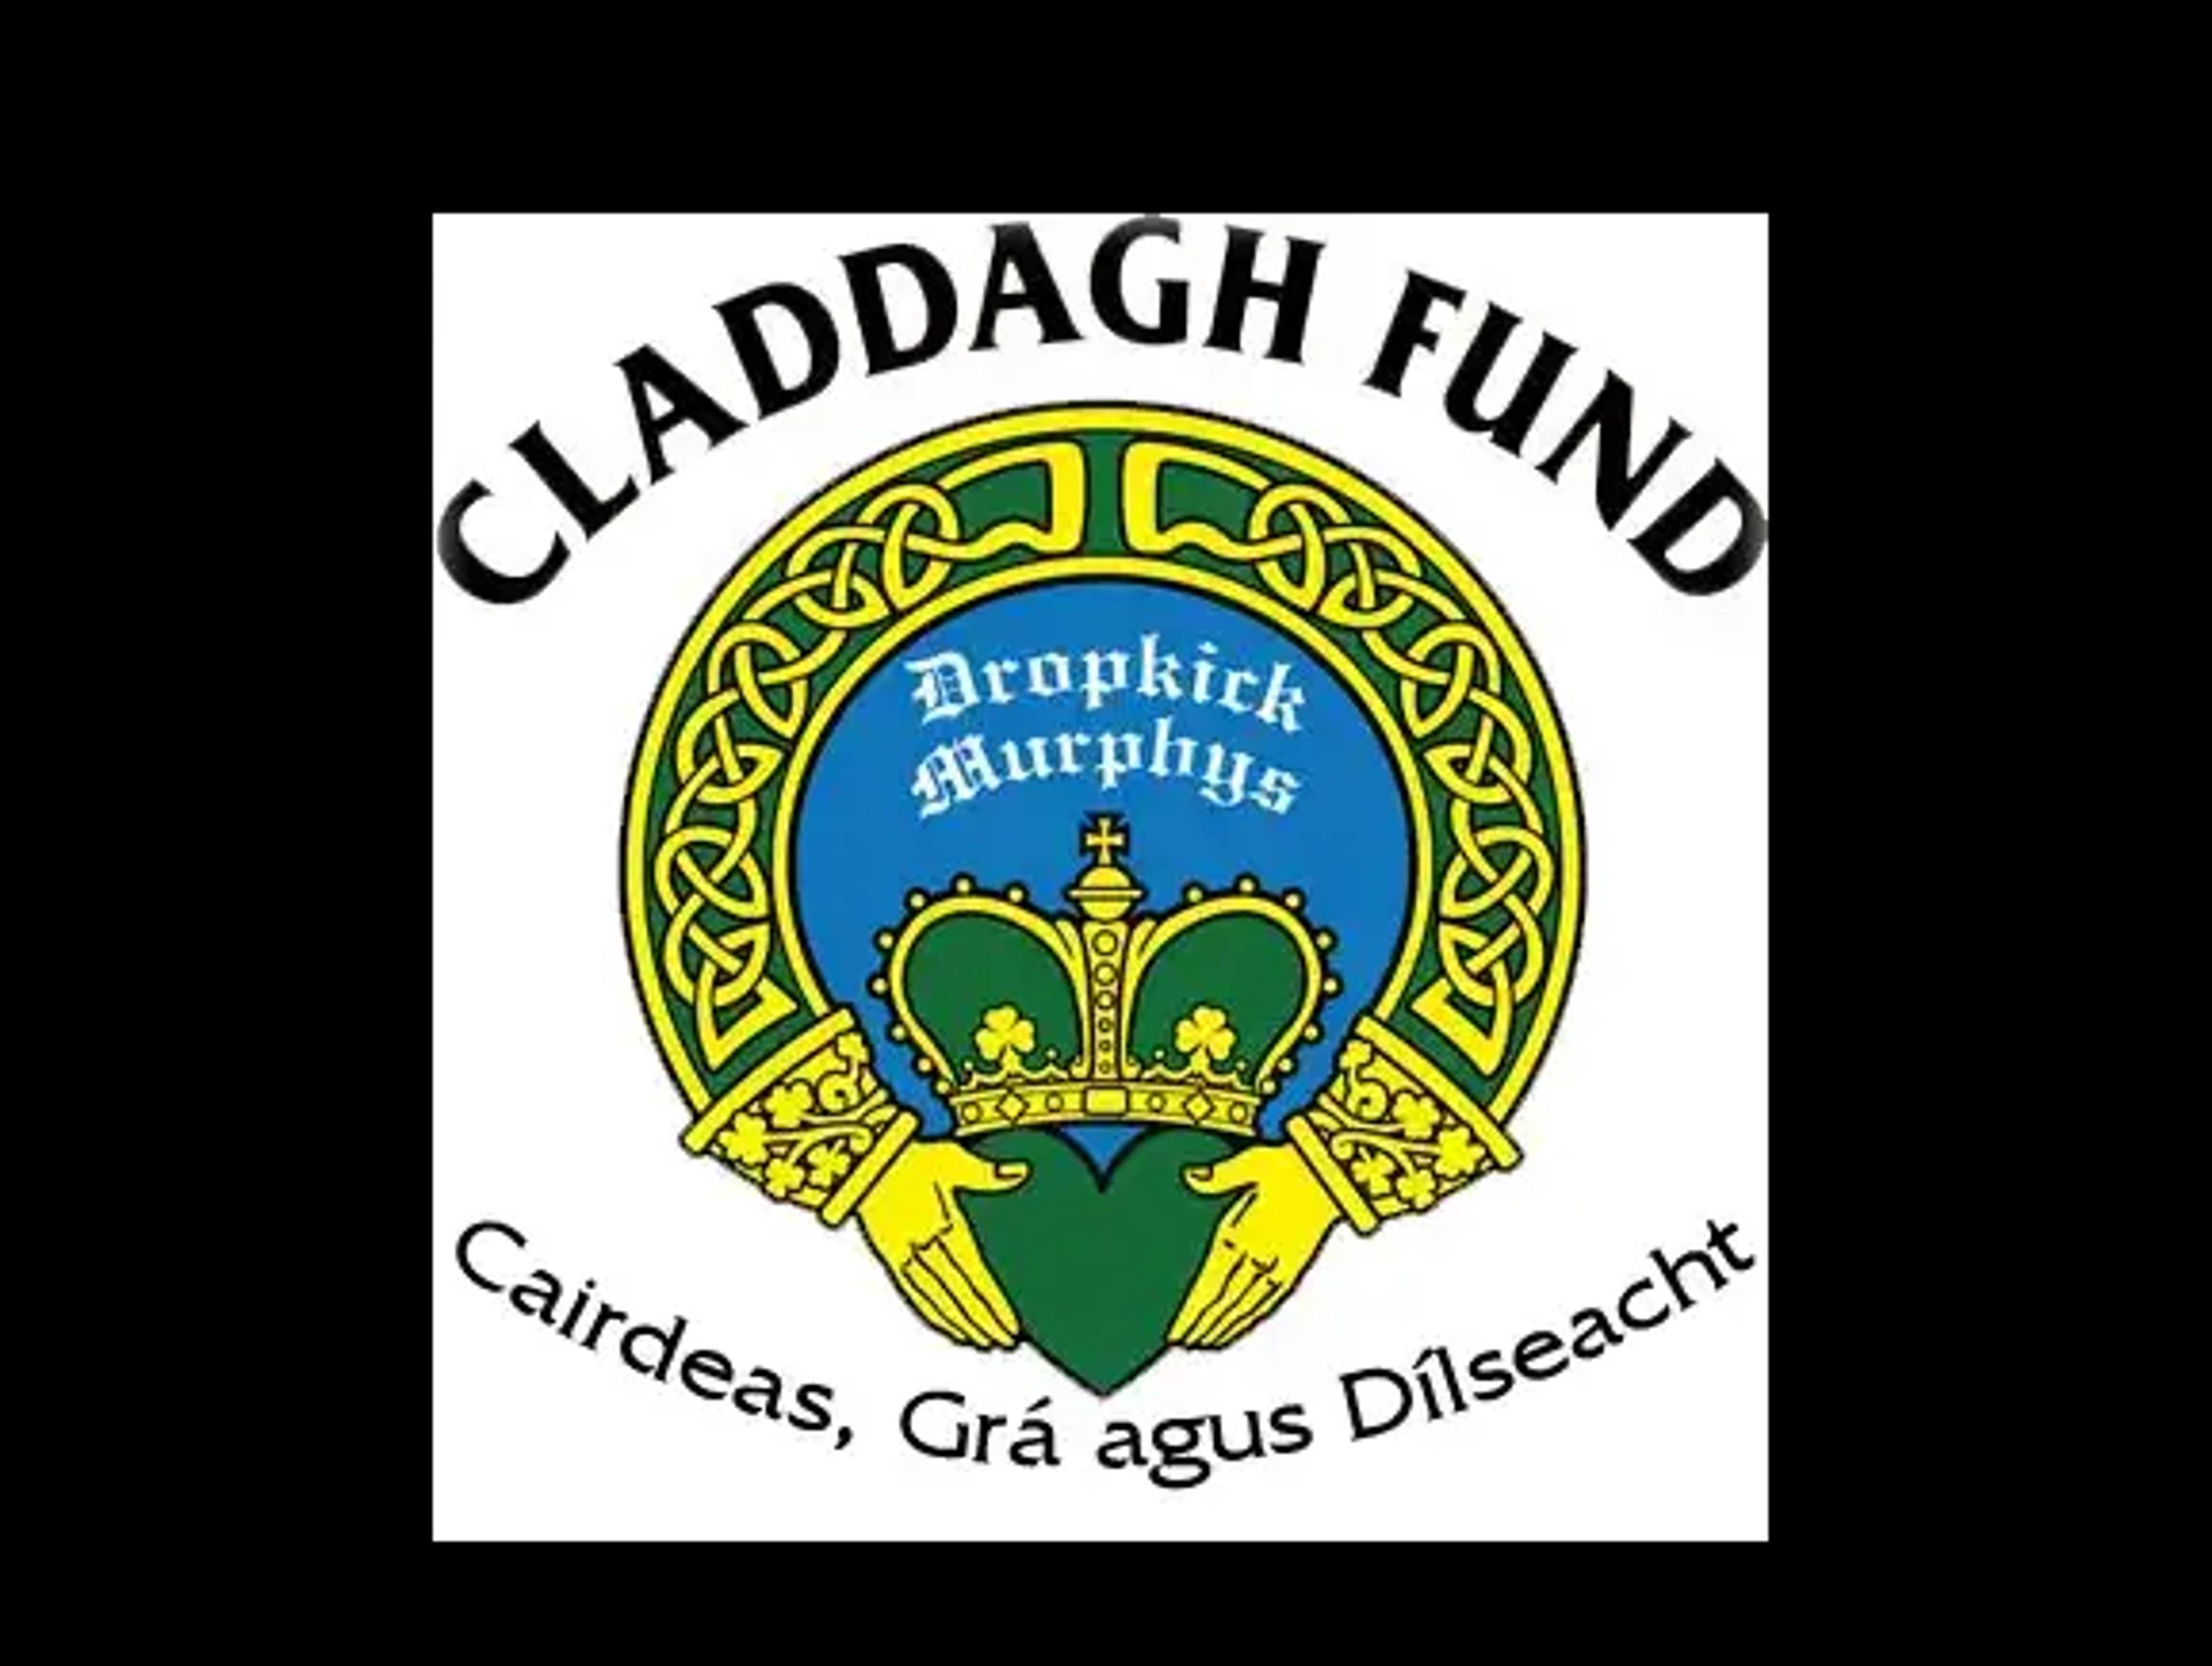 Claddagh Fund Charities Inc